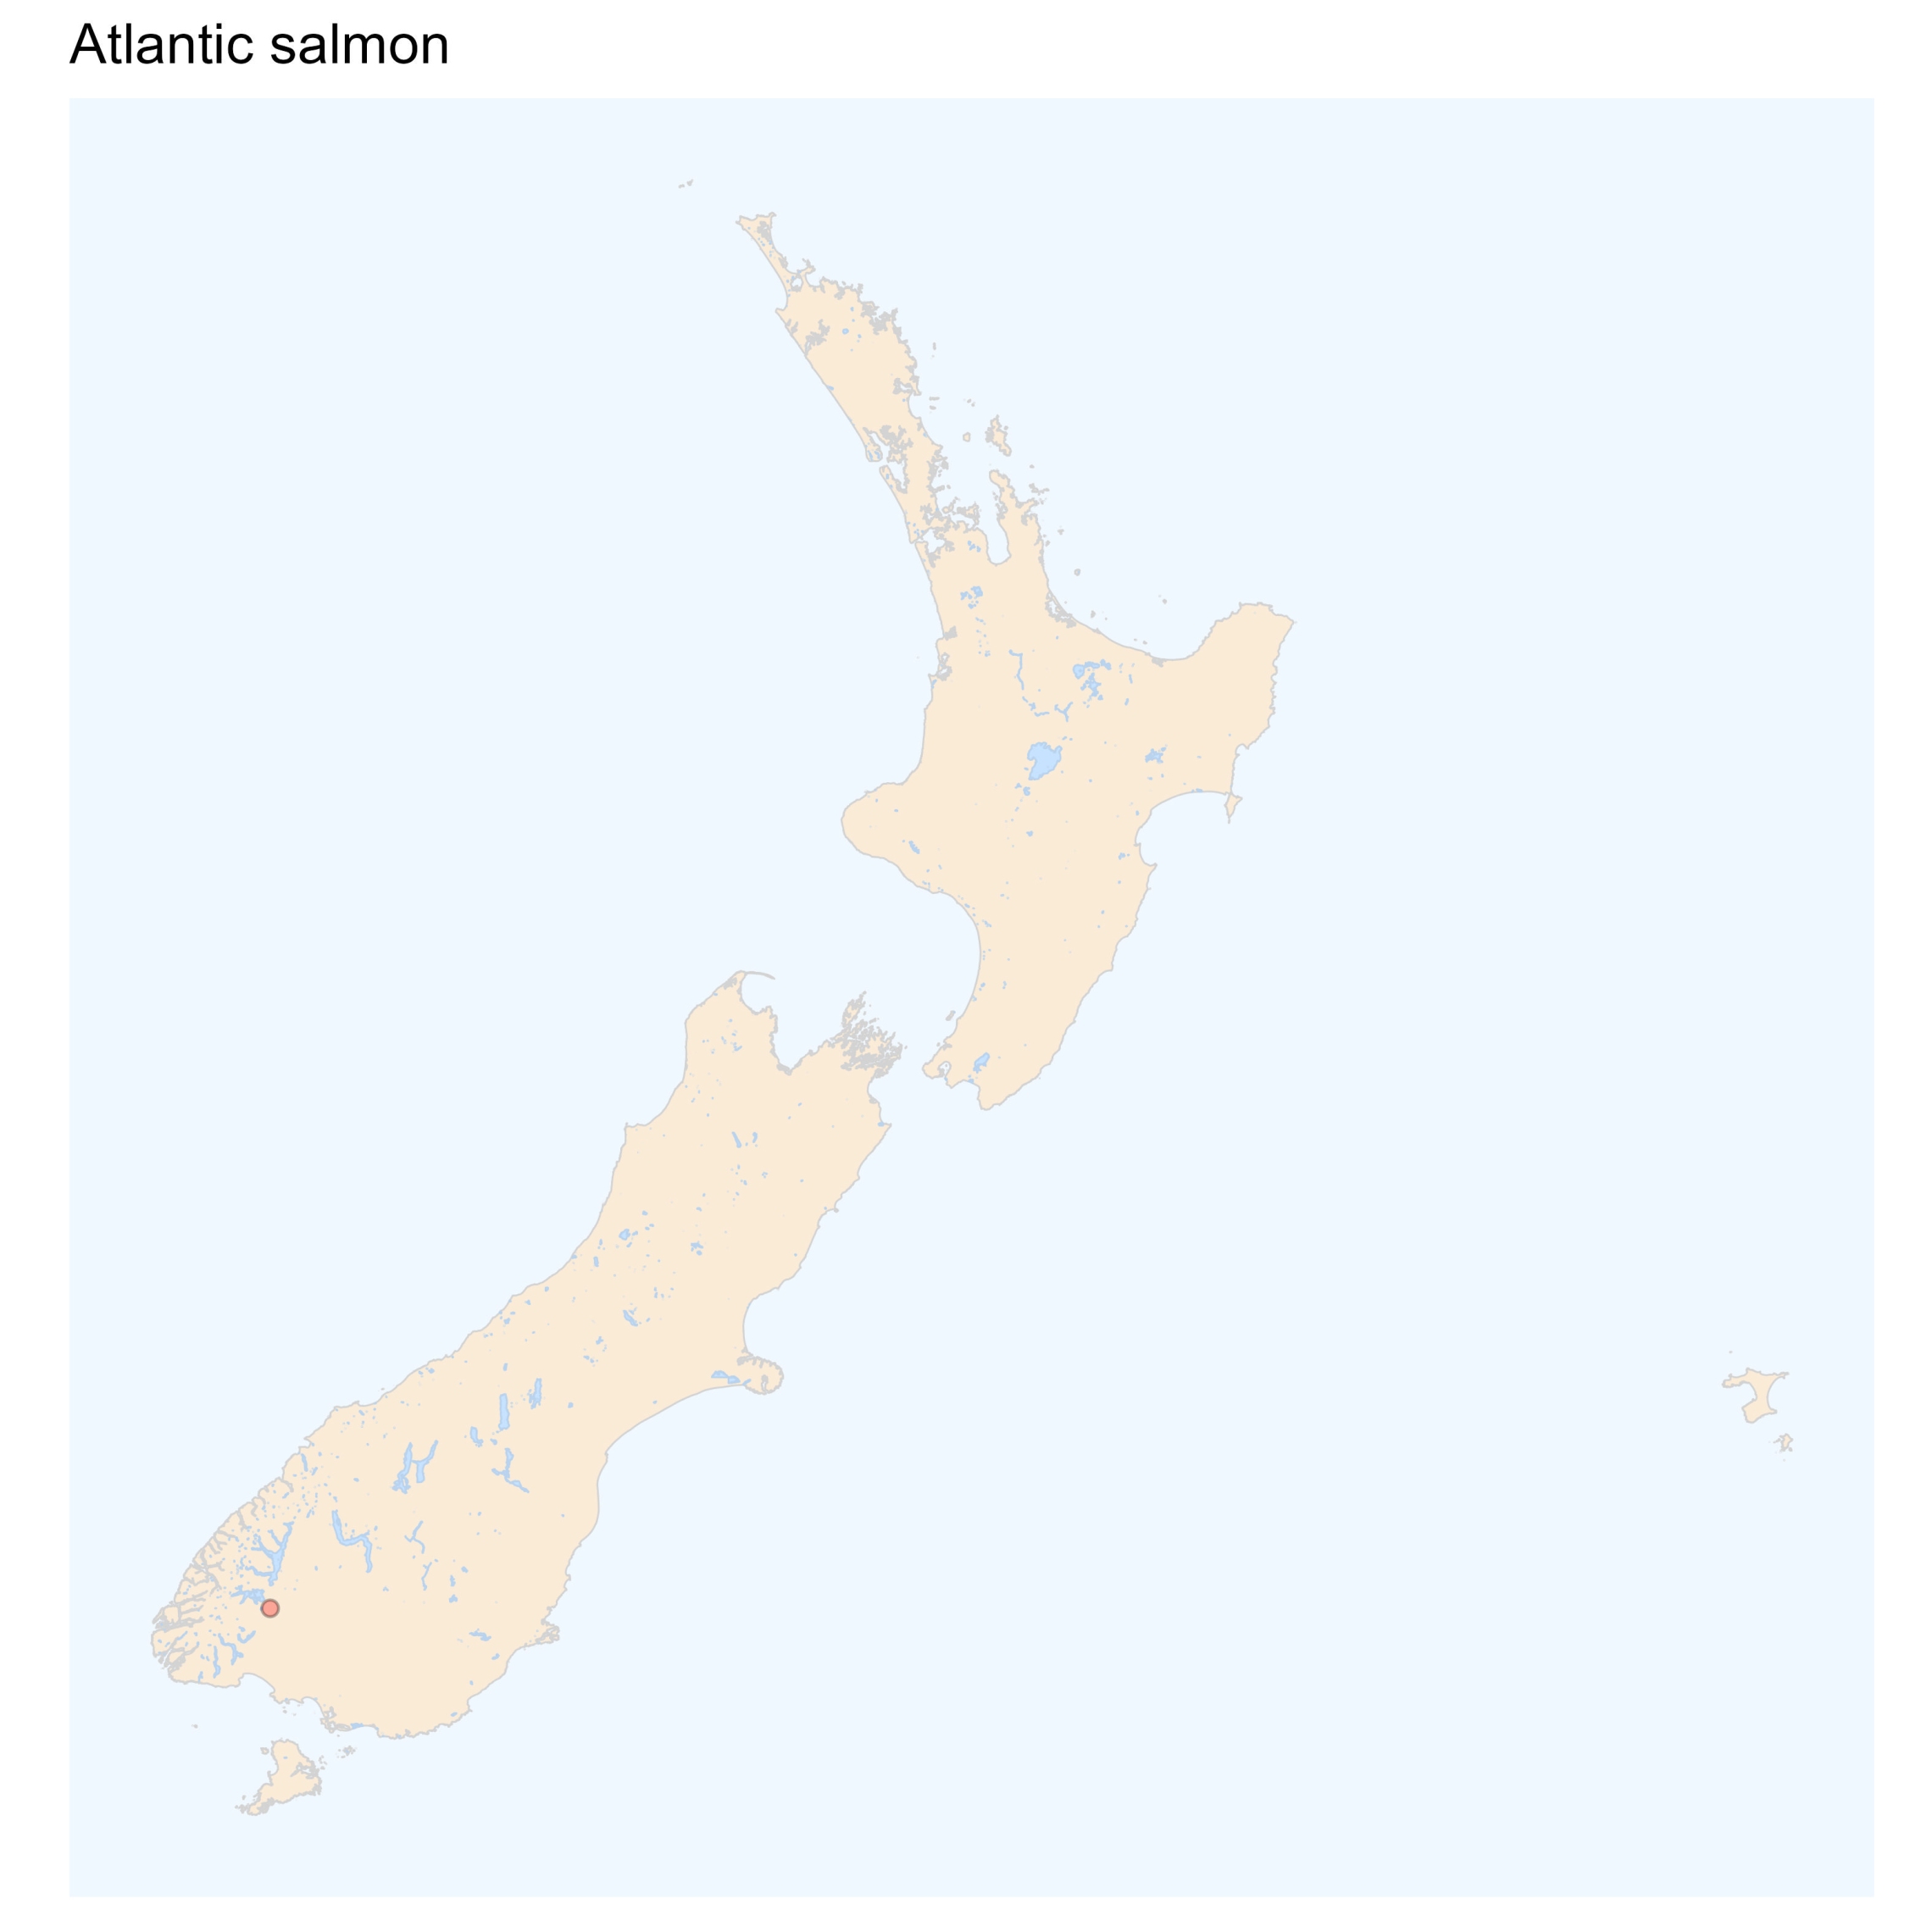 Atlantic salmon - distribution map